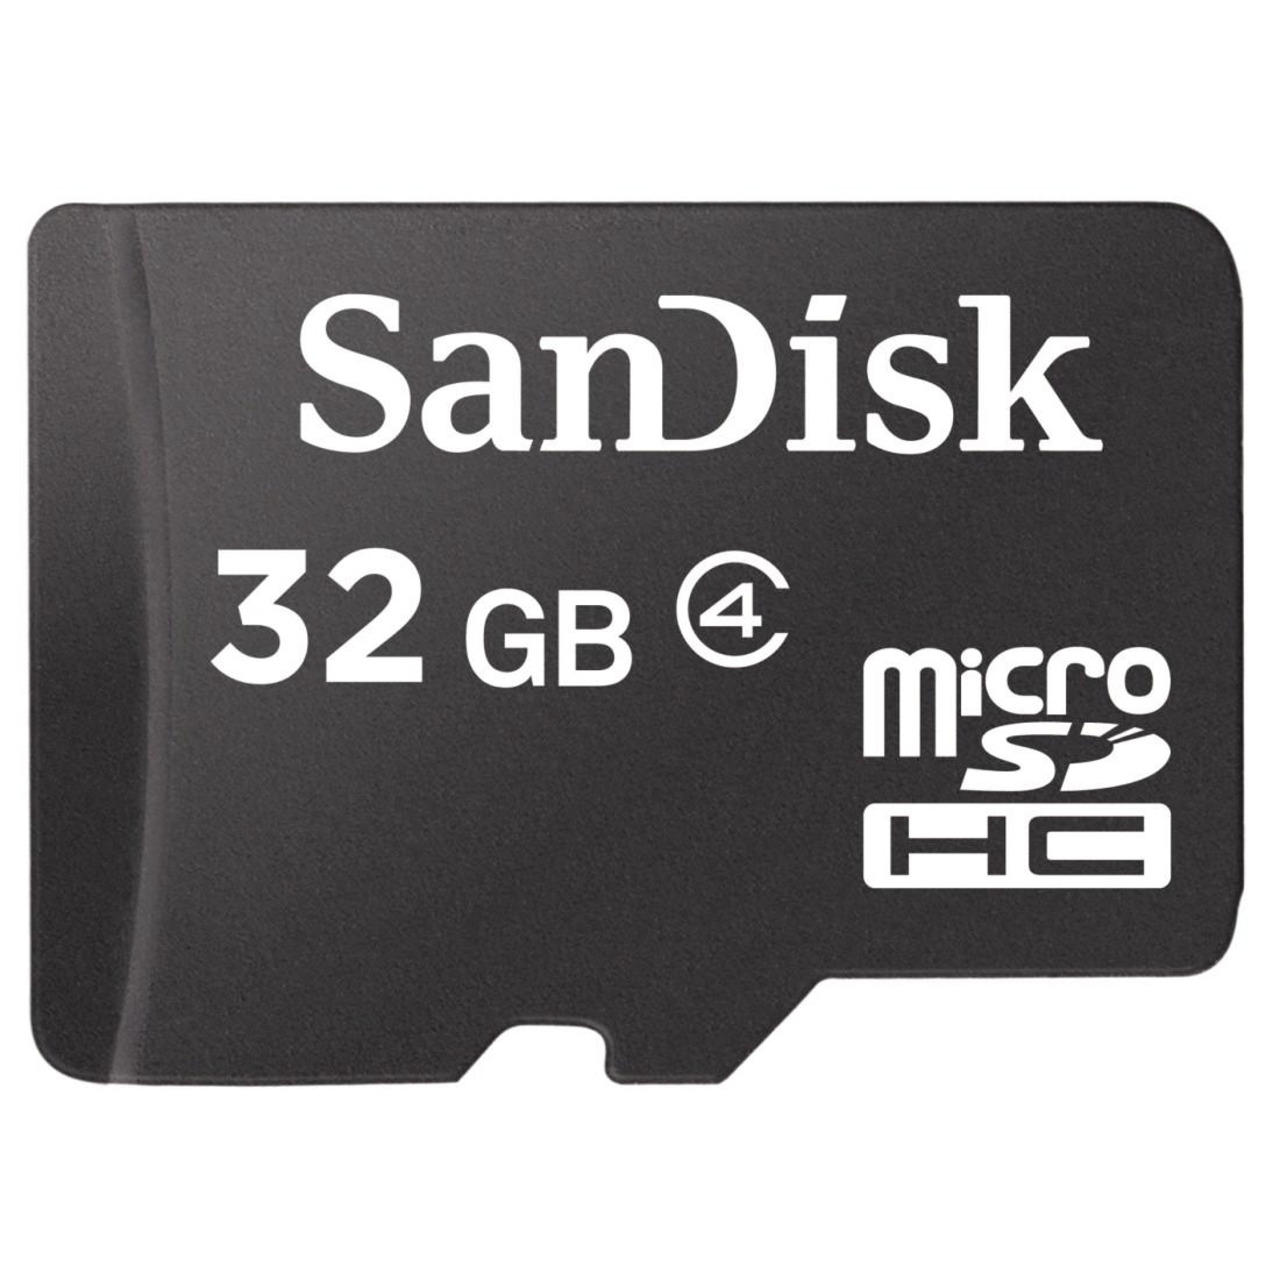 SanDisk microSDHC-Karte- Class 4- 32 GB unter PC-Hardware